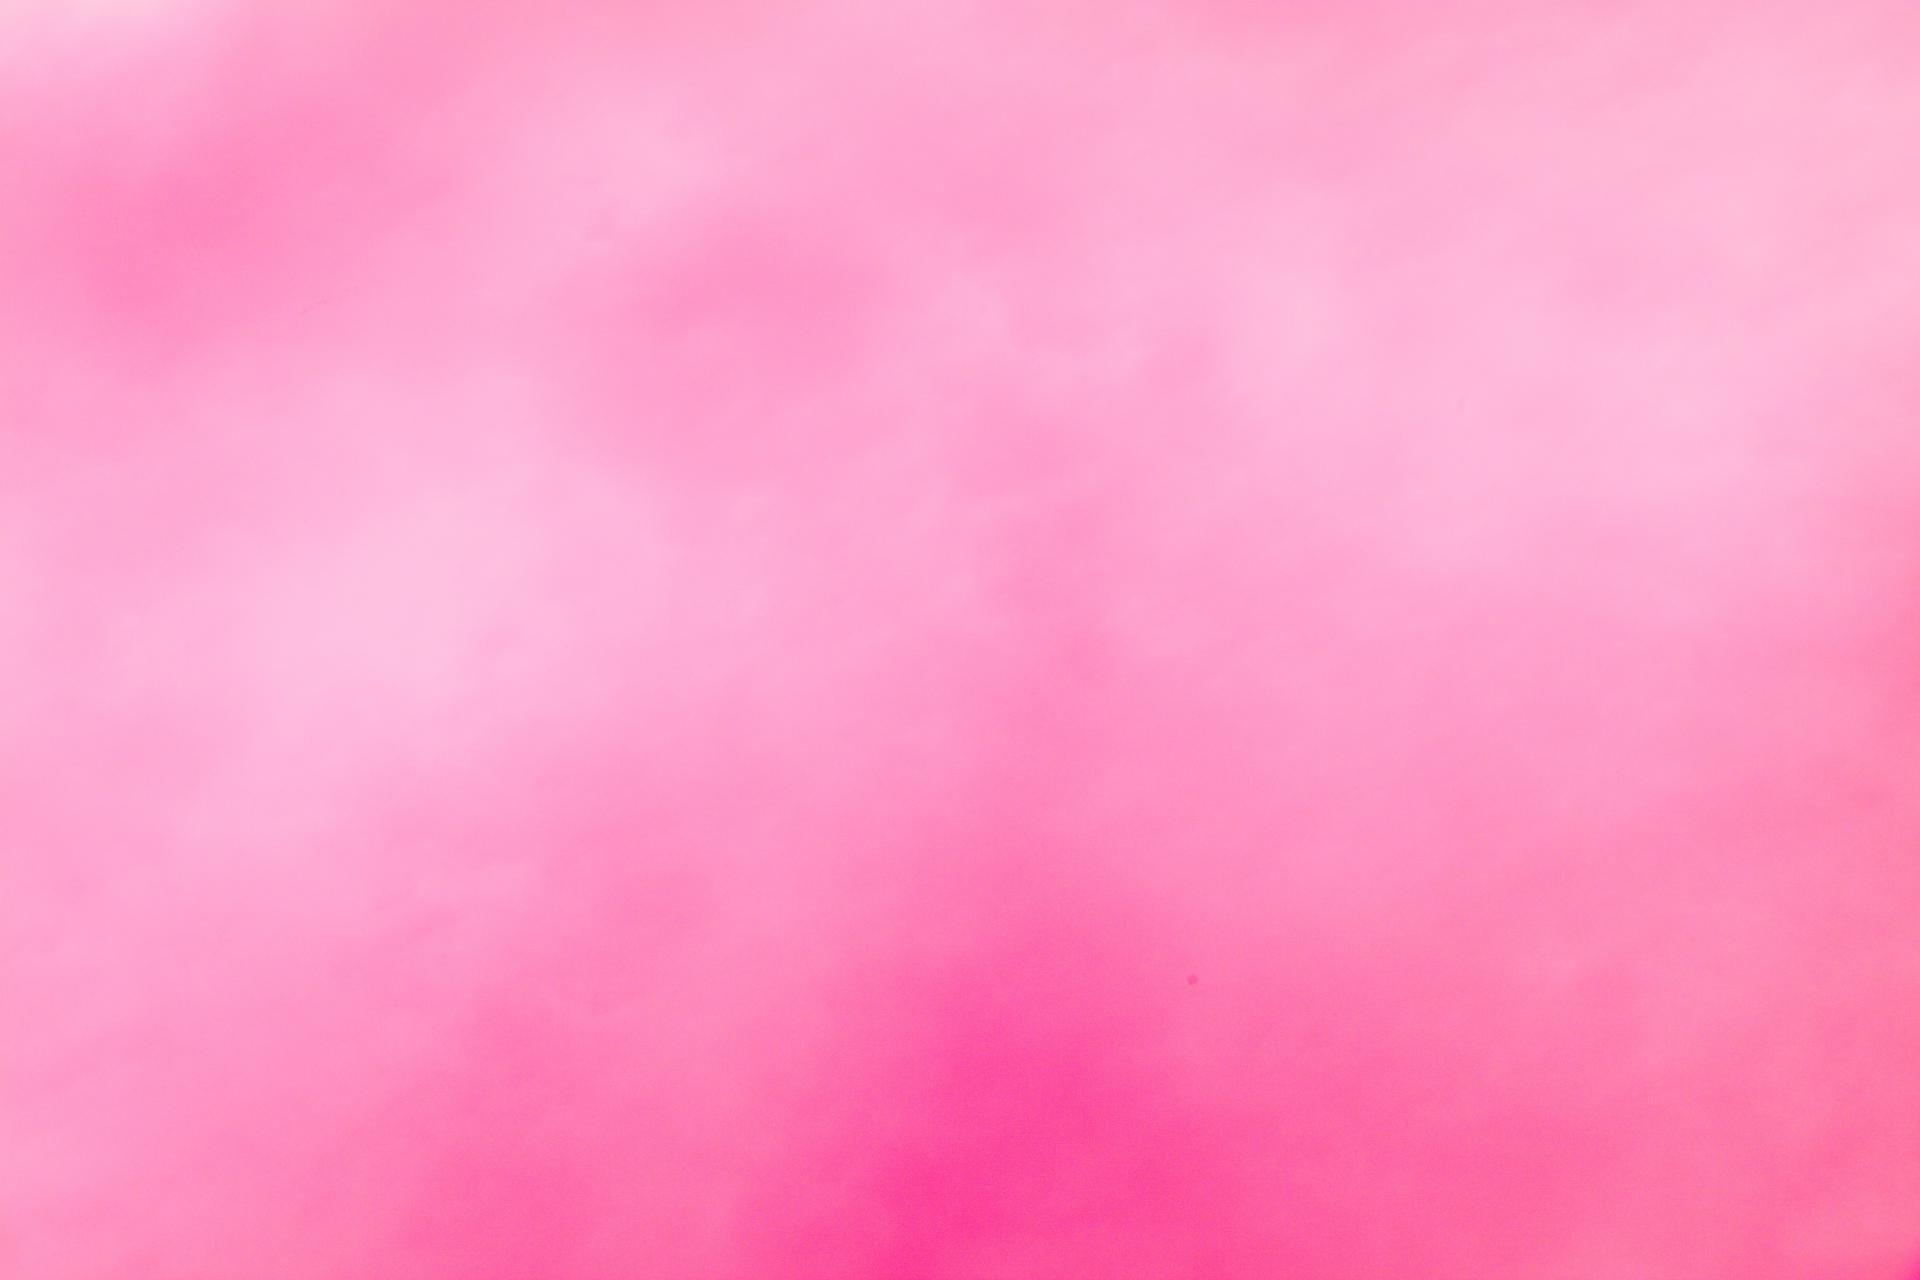 General 1920x1280 pink minimalism texture pink background simple background digital art